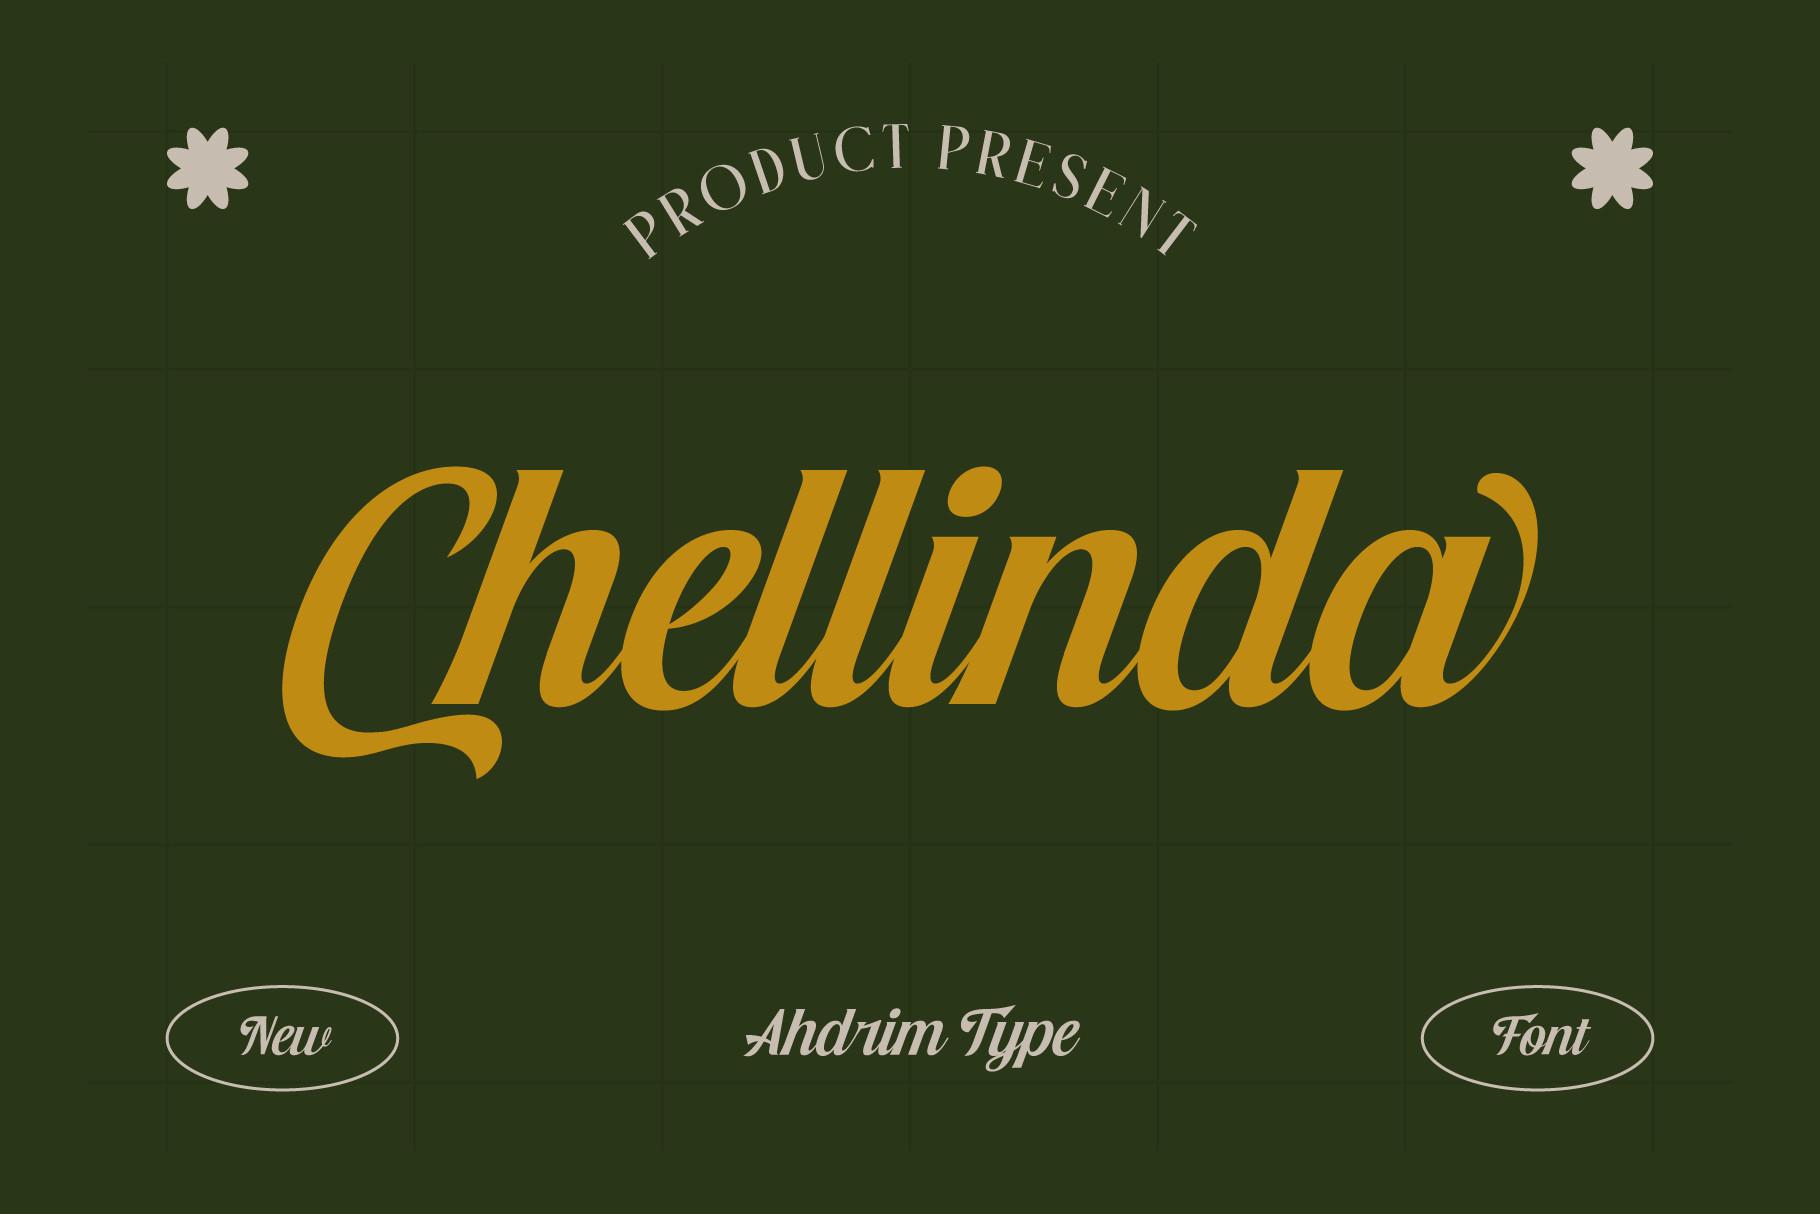 Chellinda Font